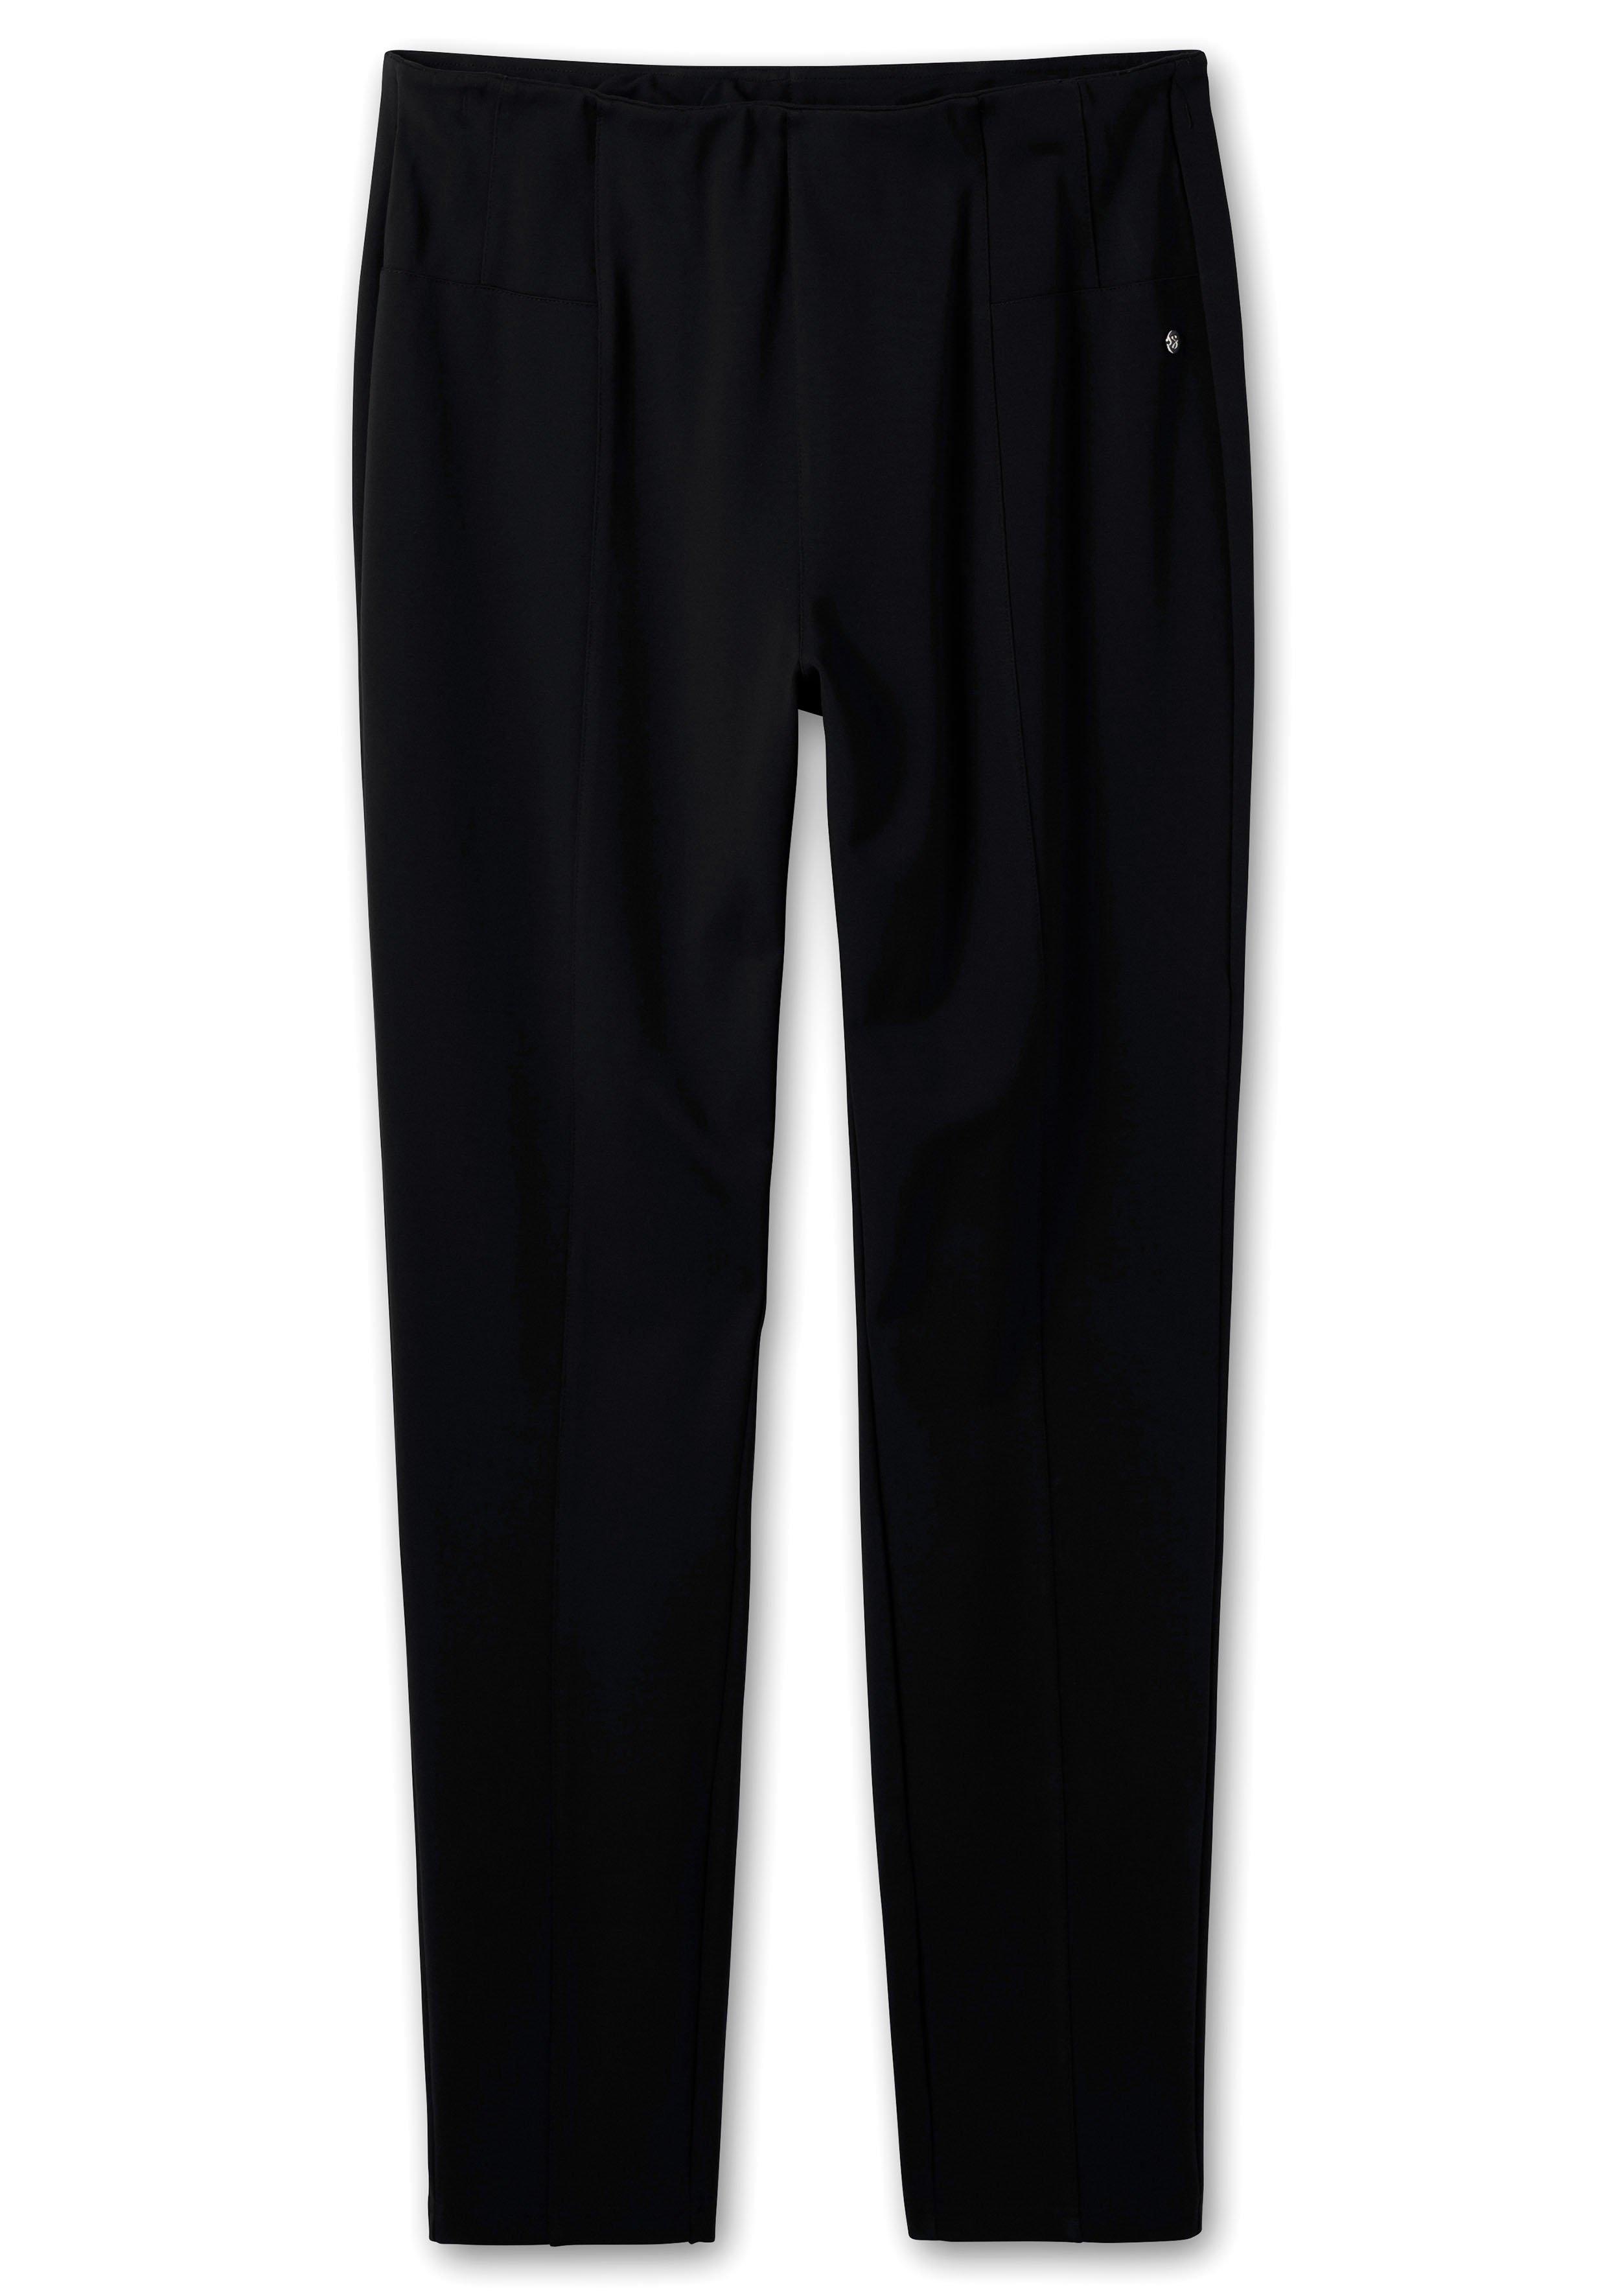 dekorativem sheego - | schwarz mit in Longform Shirtjacke Gürtel